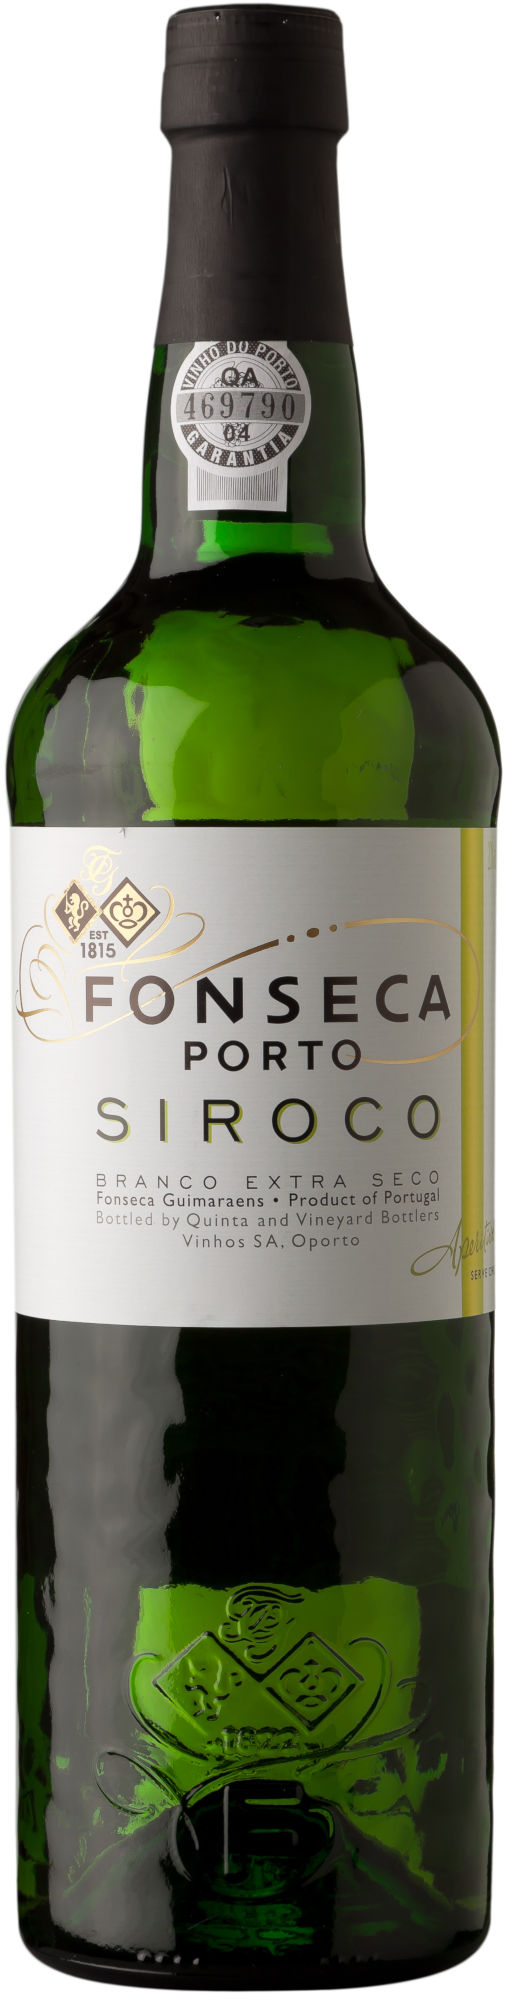 Fonseca-Siroco-White-Port